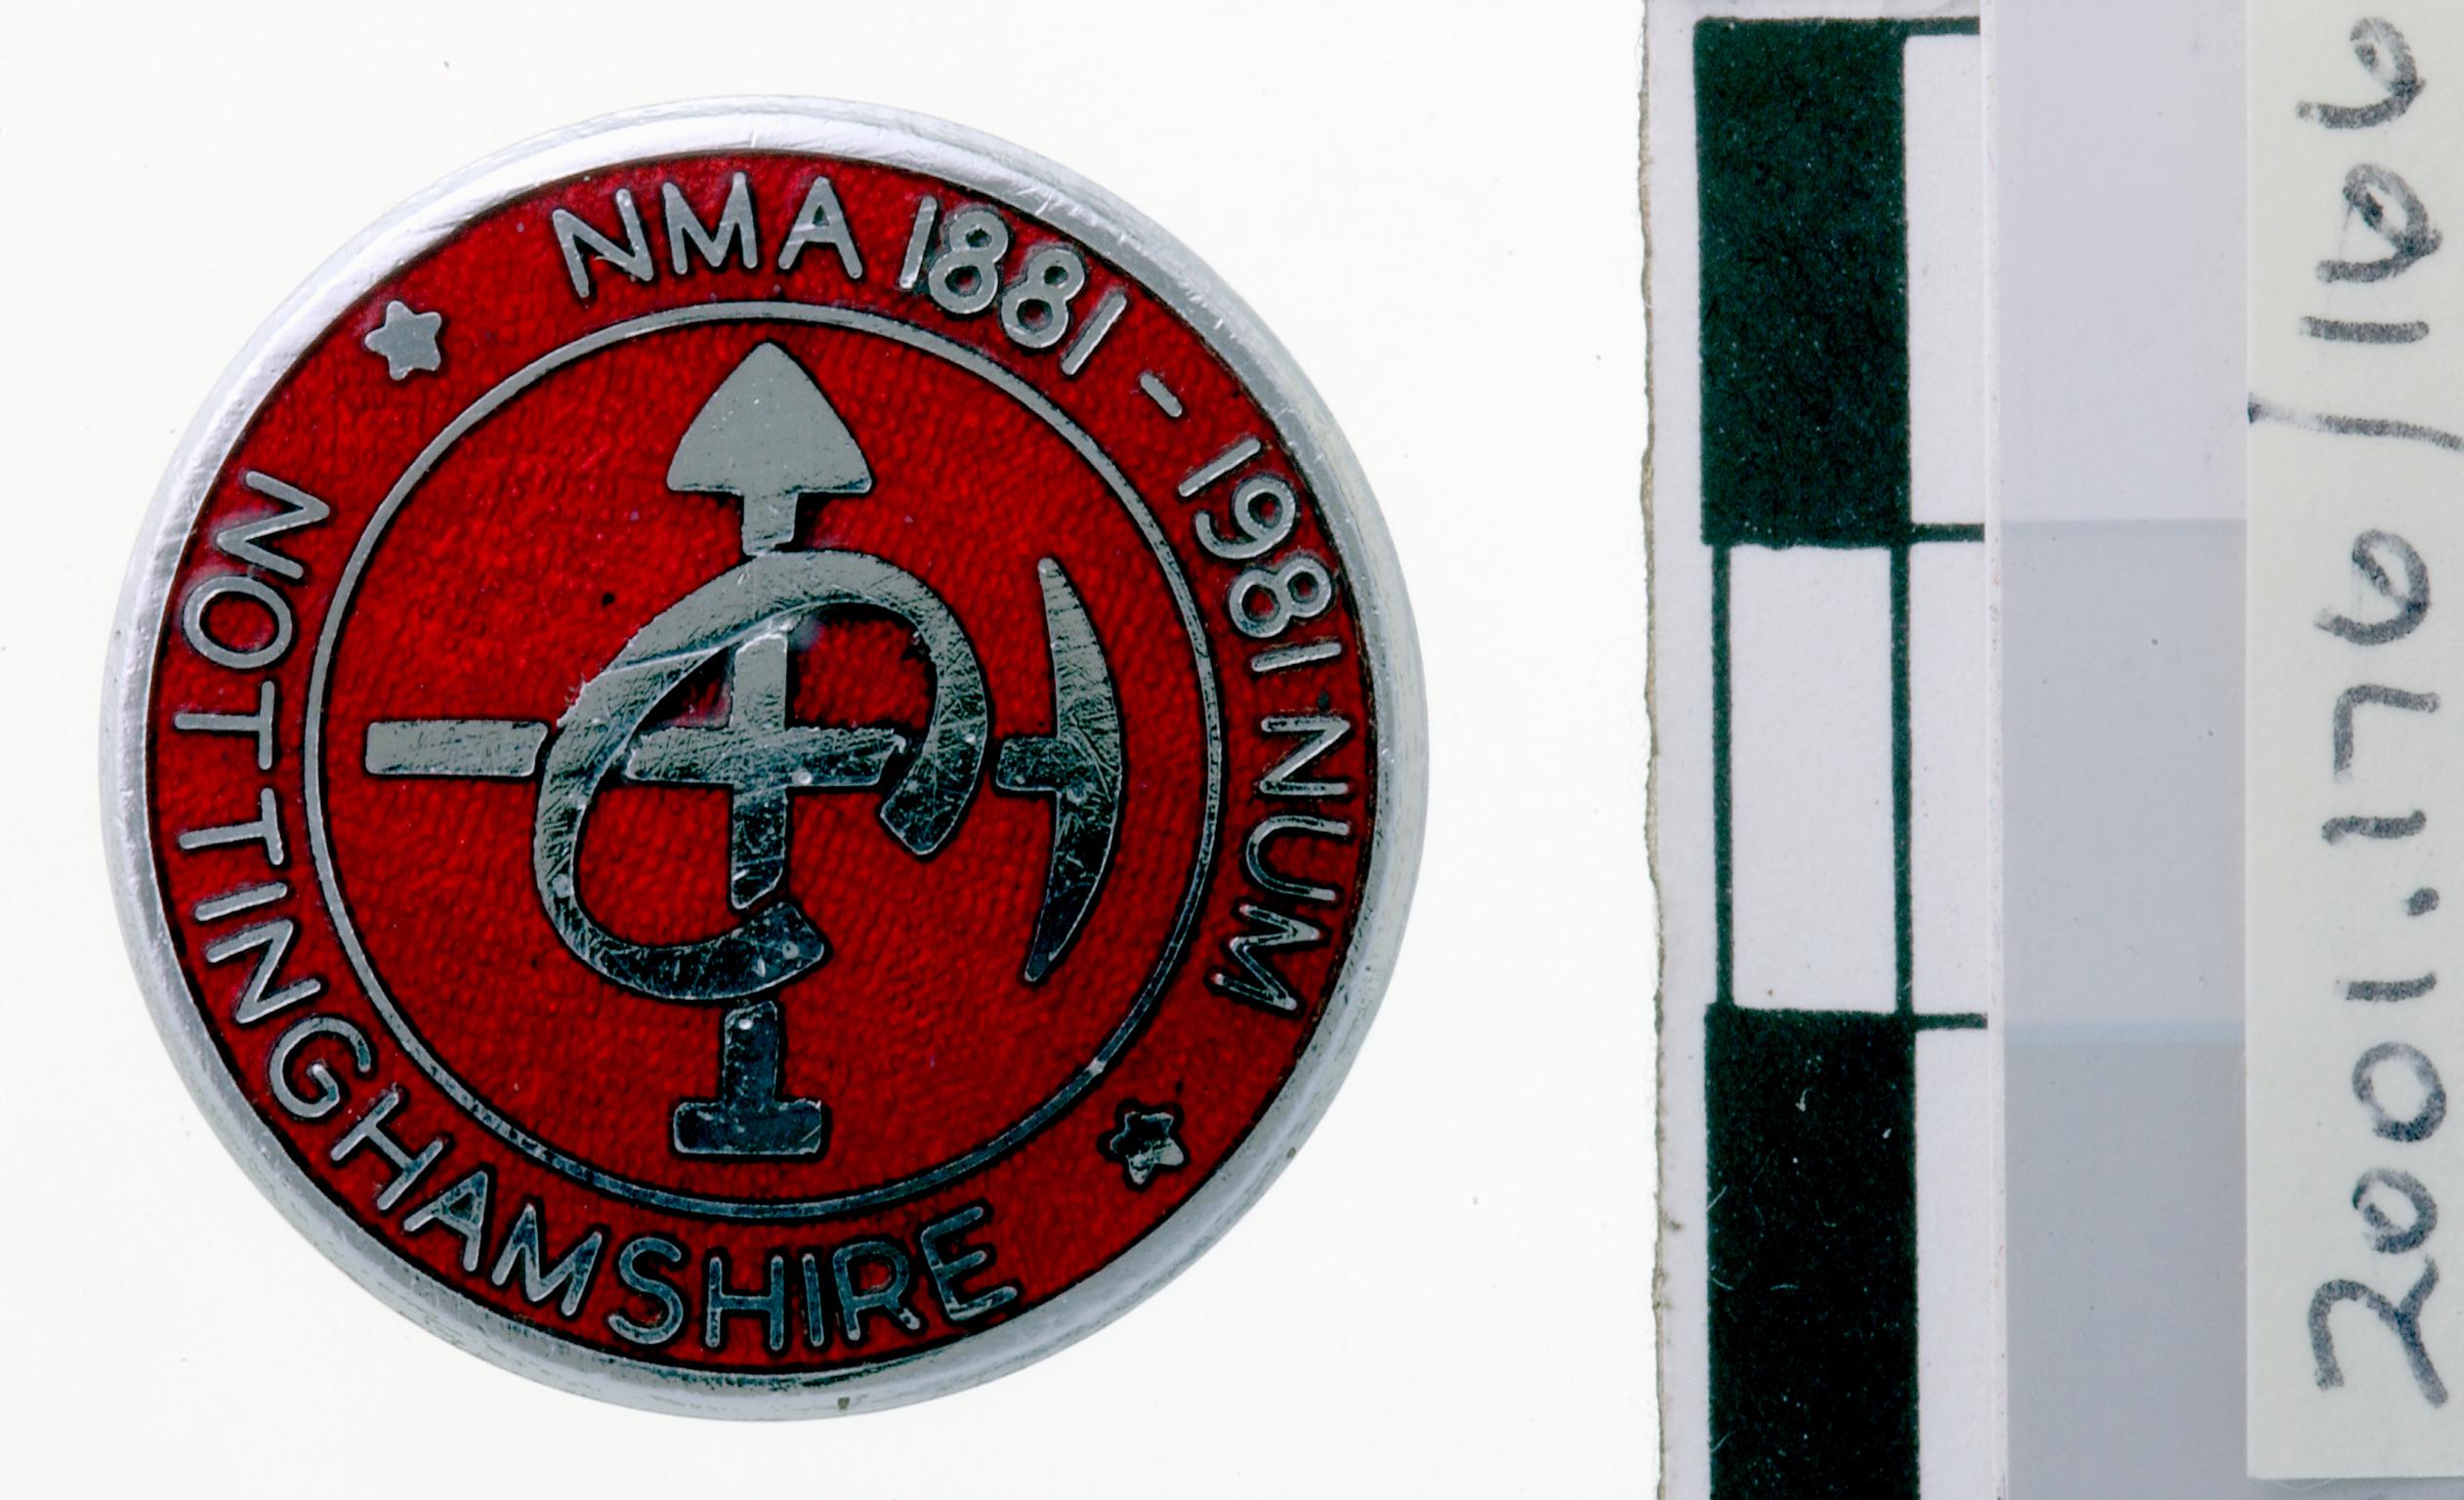 N.U.M. Nottingham, badge